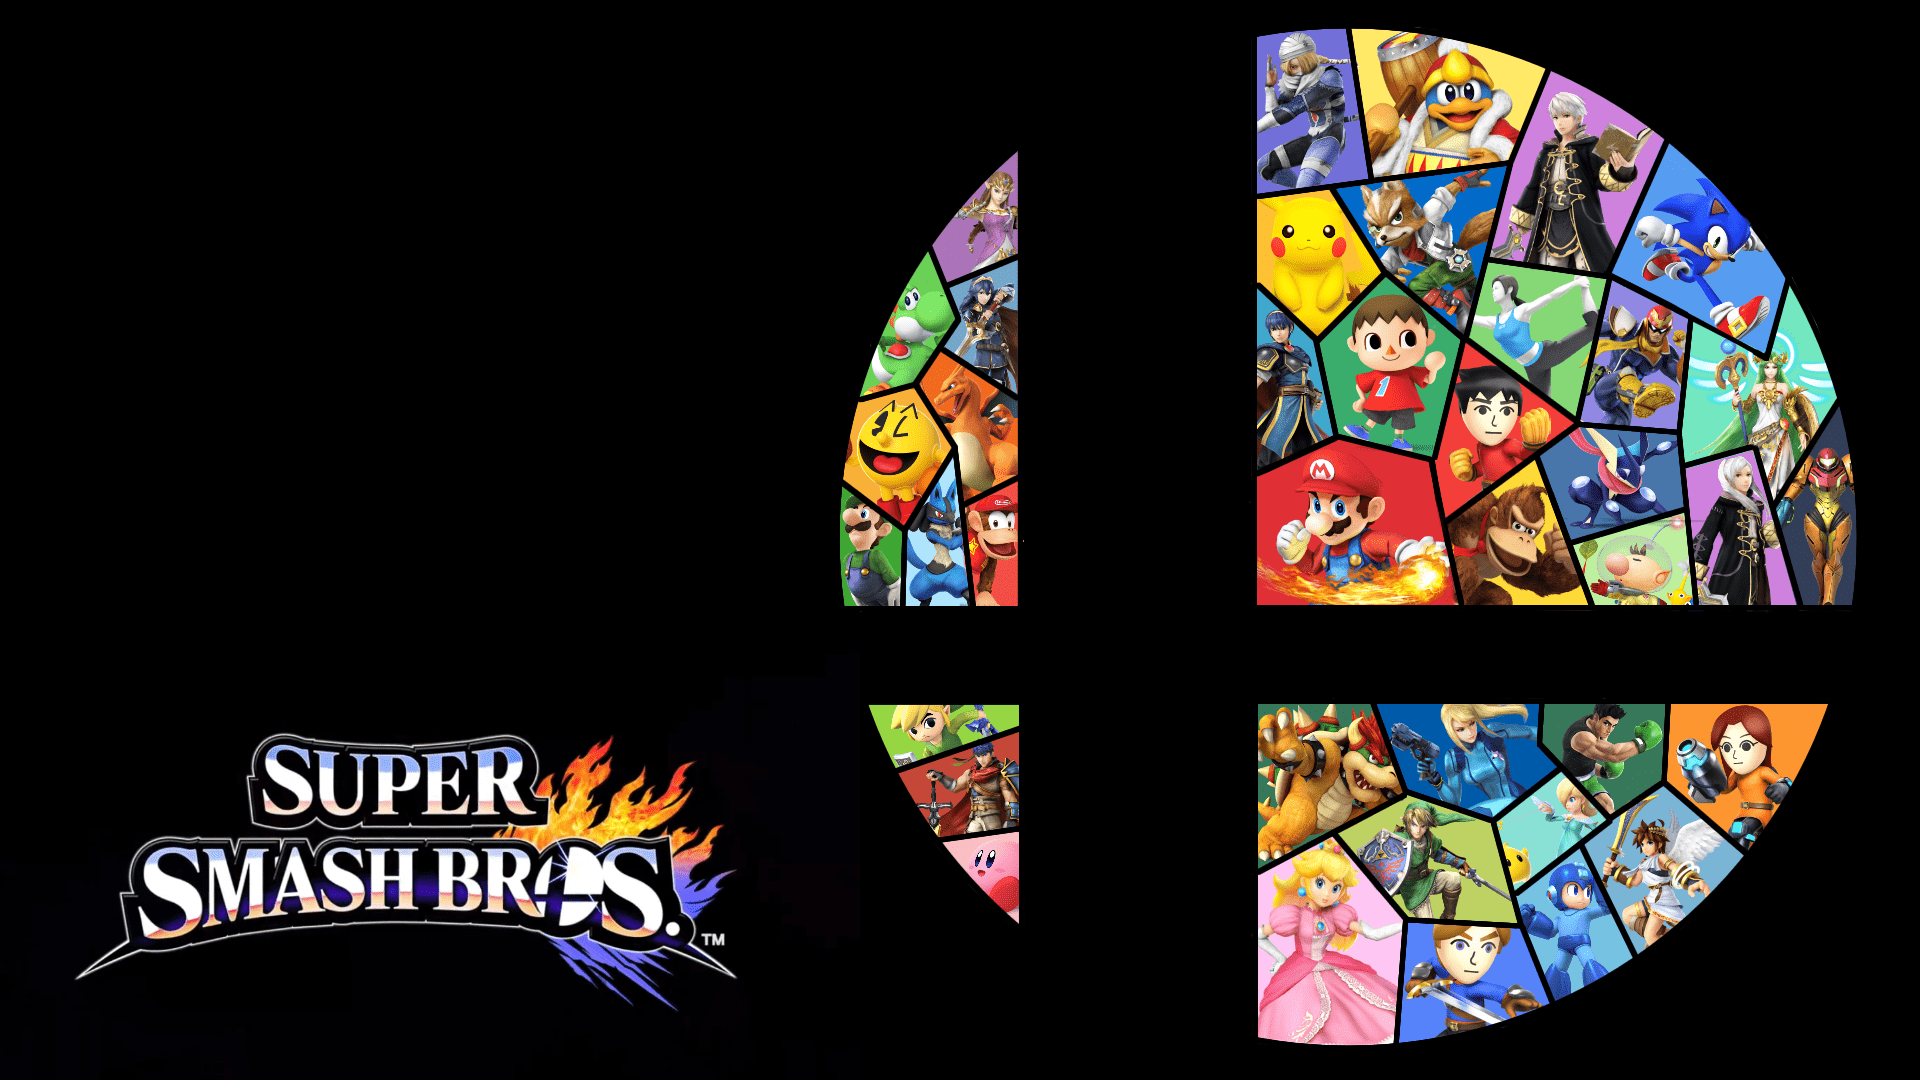 Super Smash Bros 64 Wallpapers Top Free Super Smash Bros 64 8213